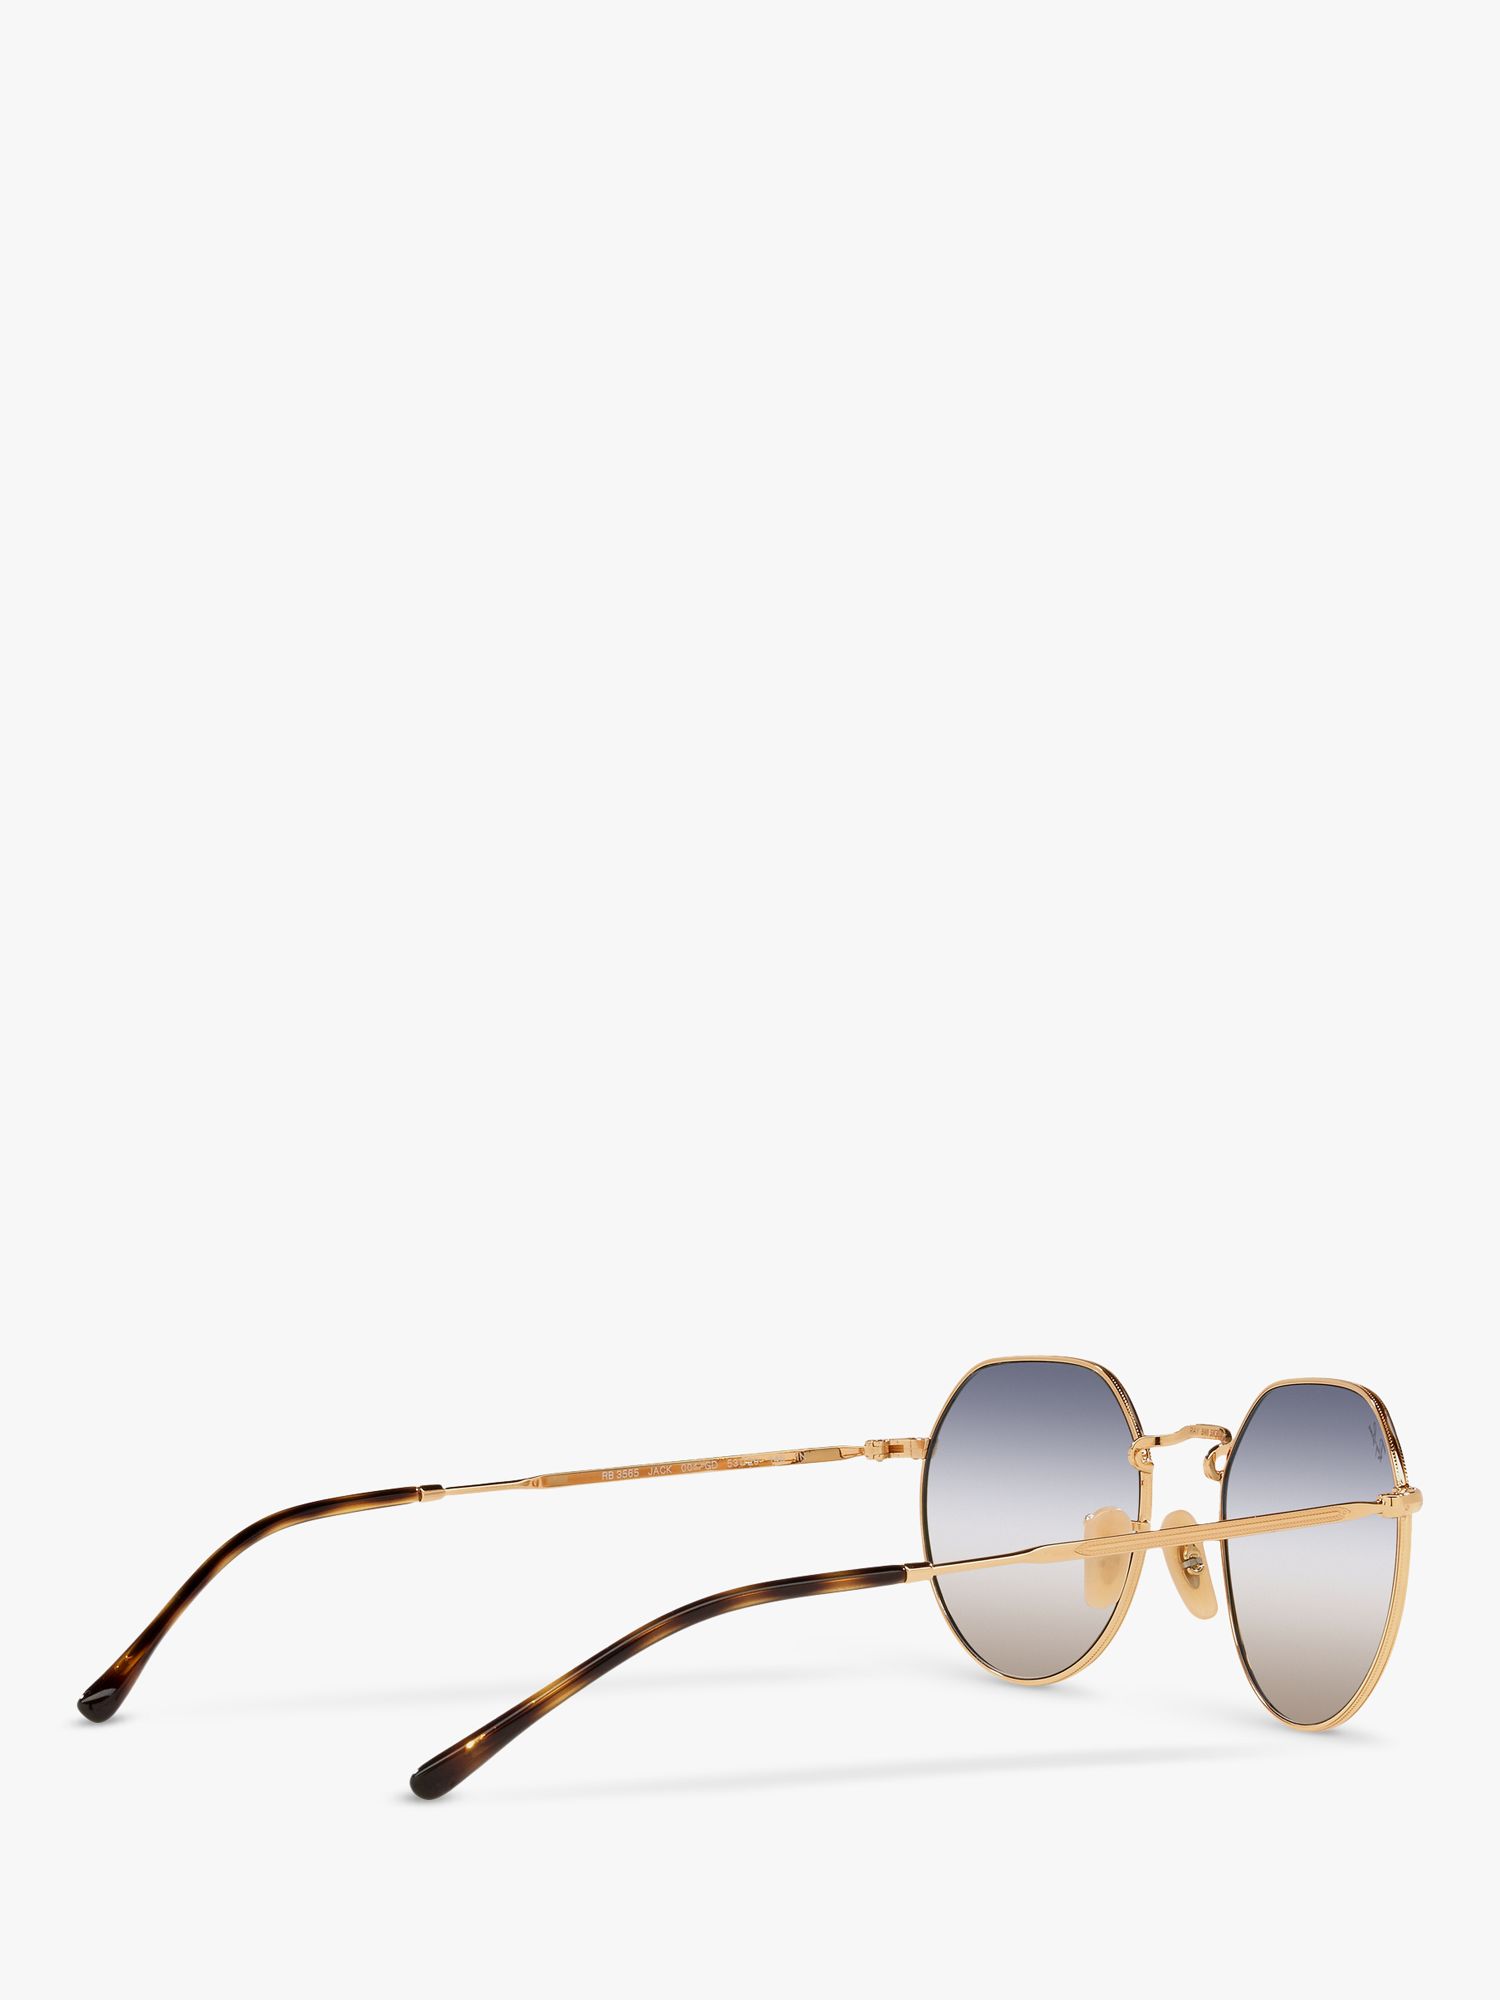 Ray-Ban RB3565 Jack Unisex Metal Hexagonal Sunglasses, Gold/Multi Gradient